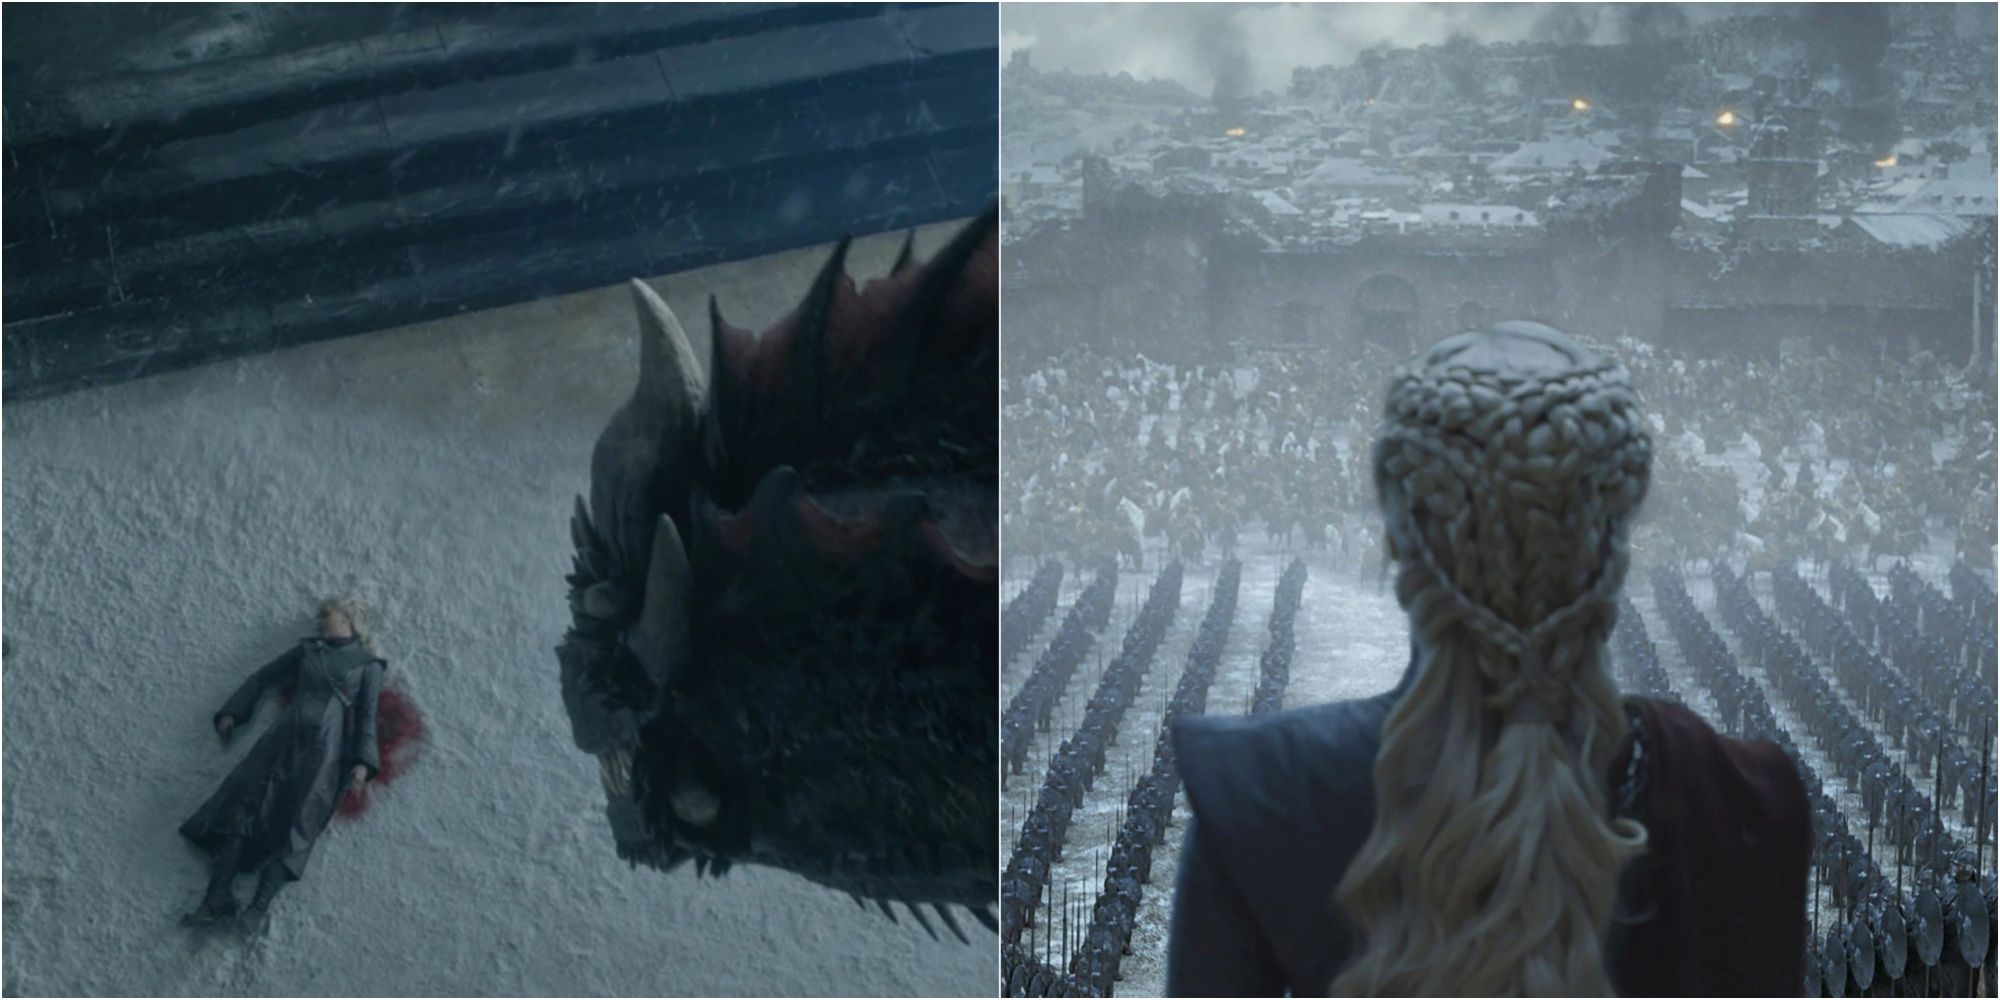 Split image of dead Daenerys Targaryen and Daenerys' victory speech in Game of Thrones.